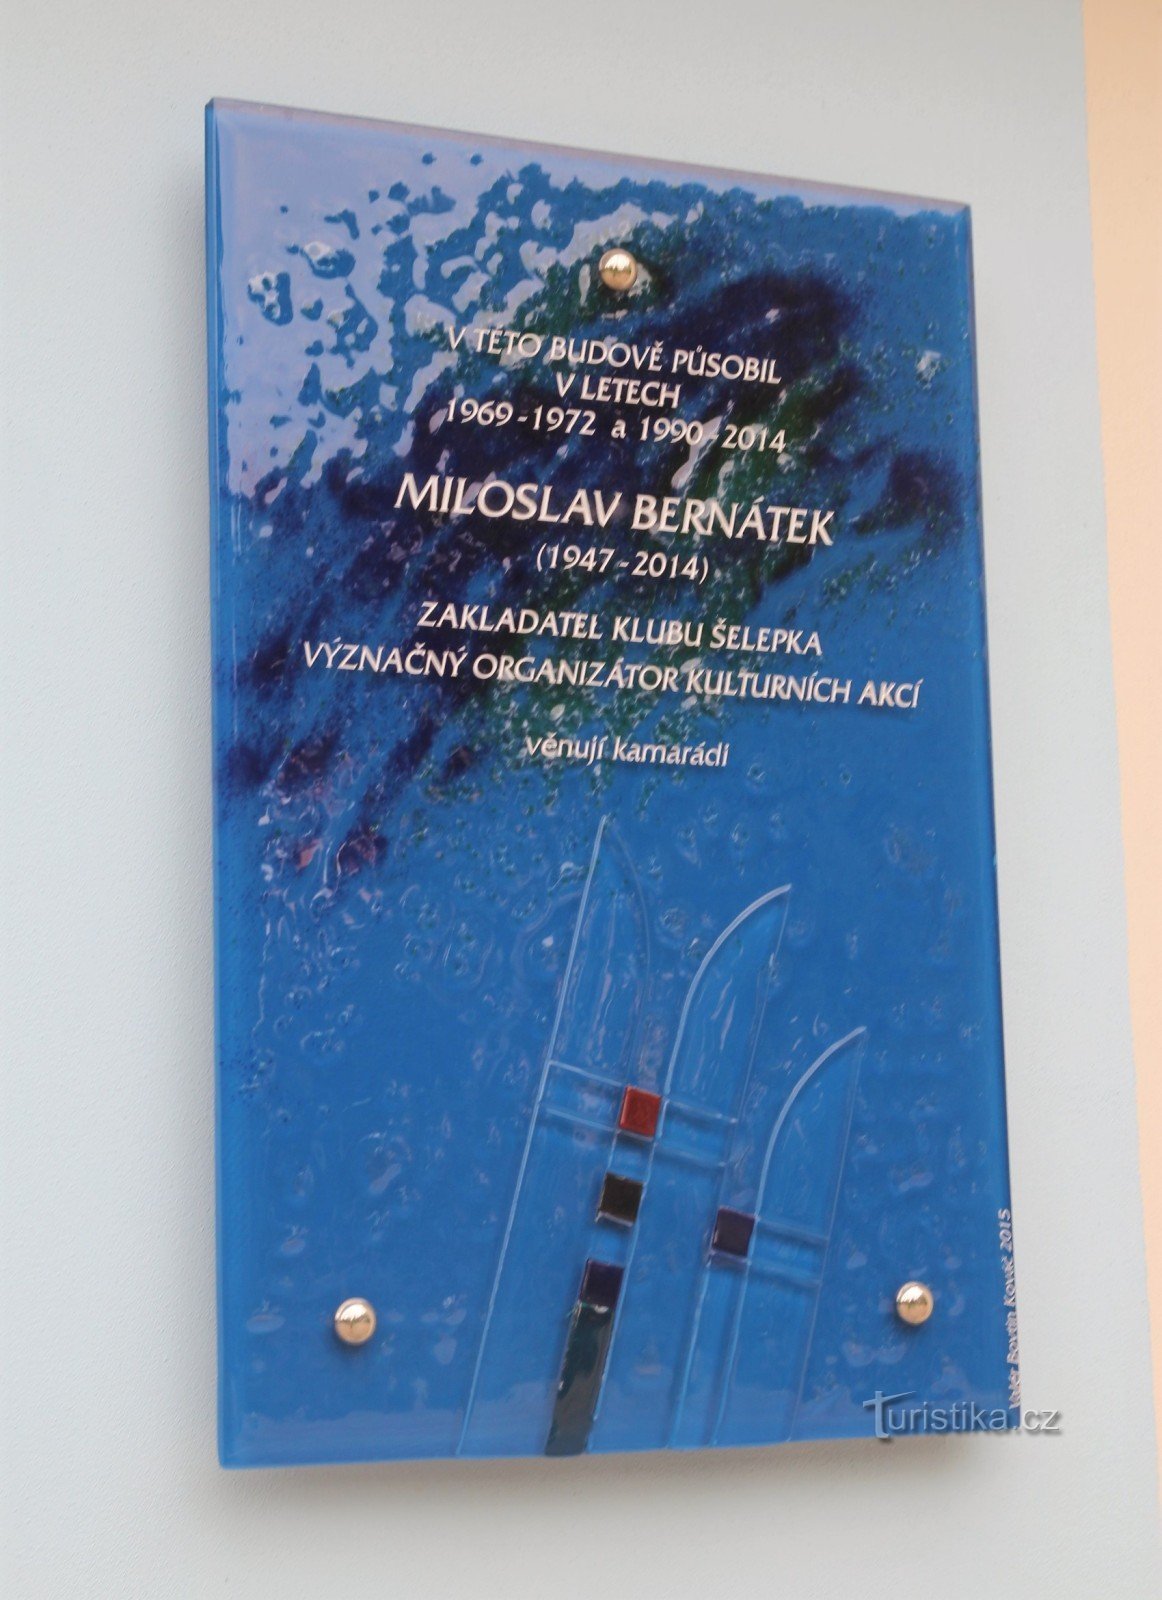 Brno-Ponava - tấm bảng tưởng niệm Miloš Bernátek